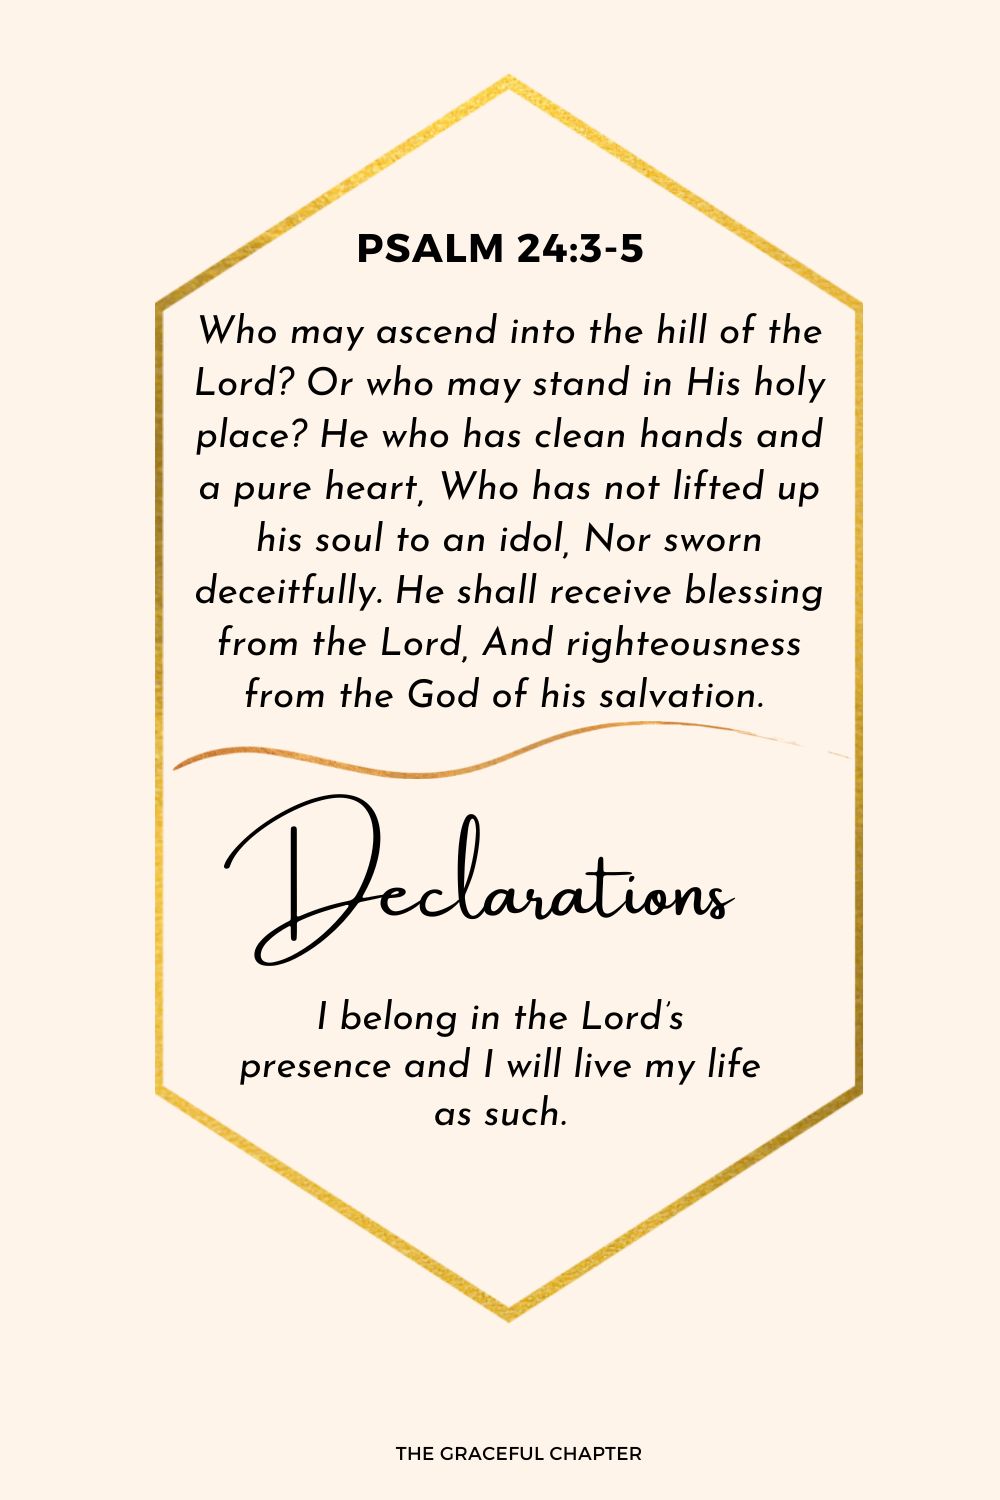 Declaration- Psalm 24:3-5